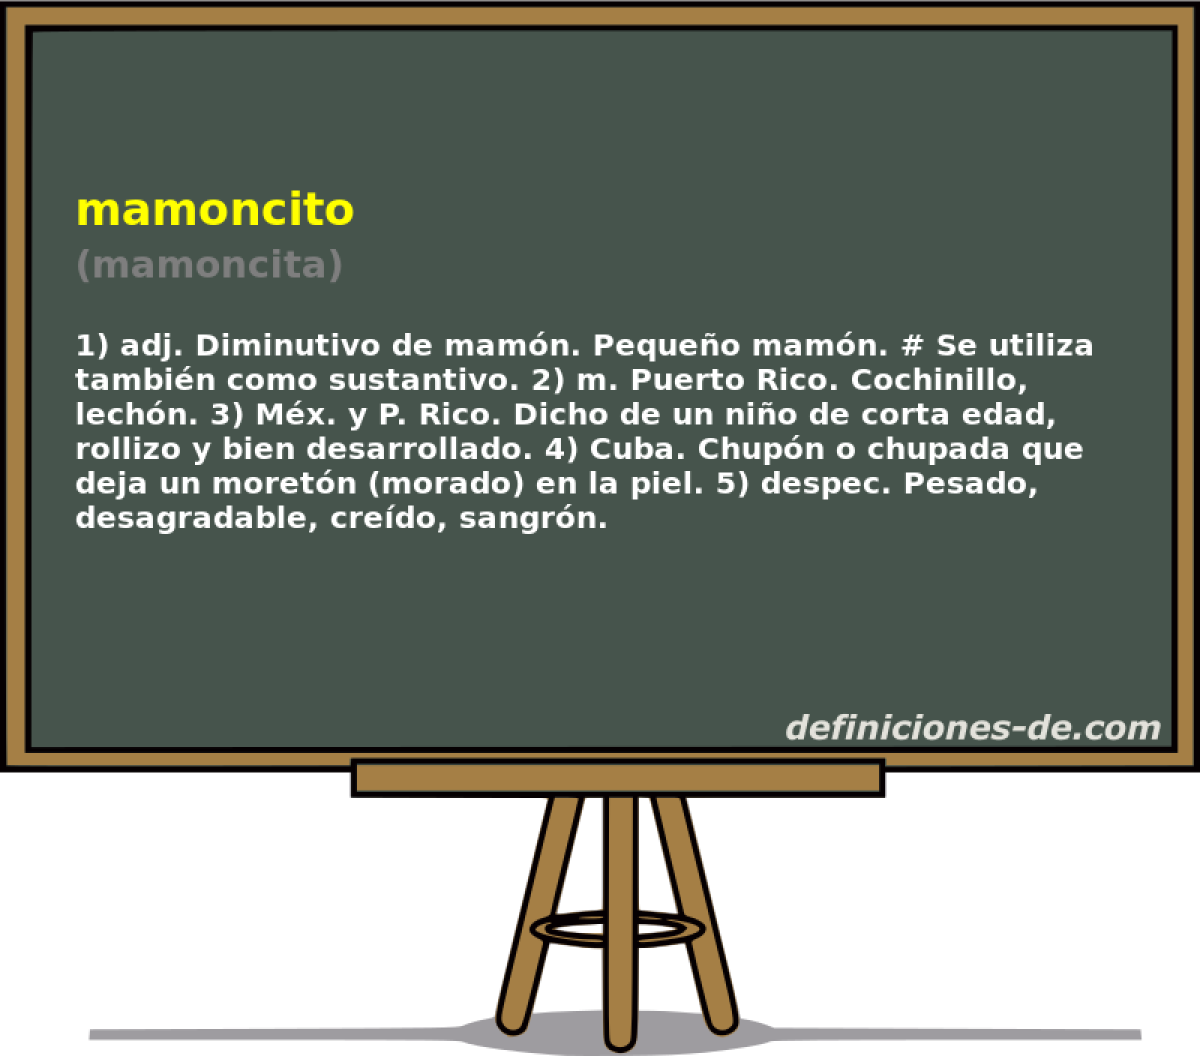 mamoncito (mamoncita)